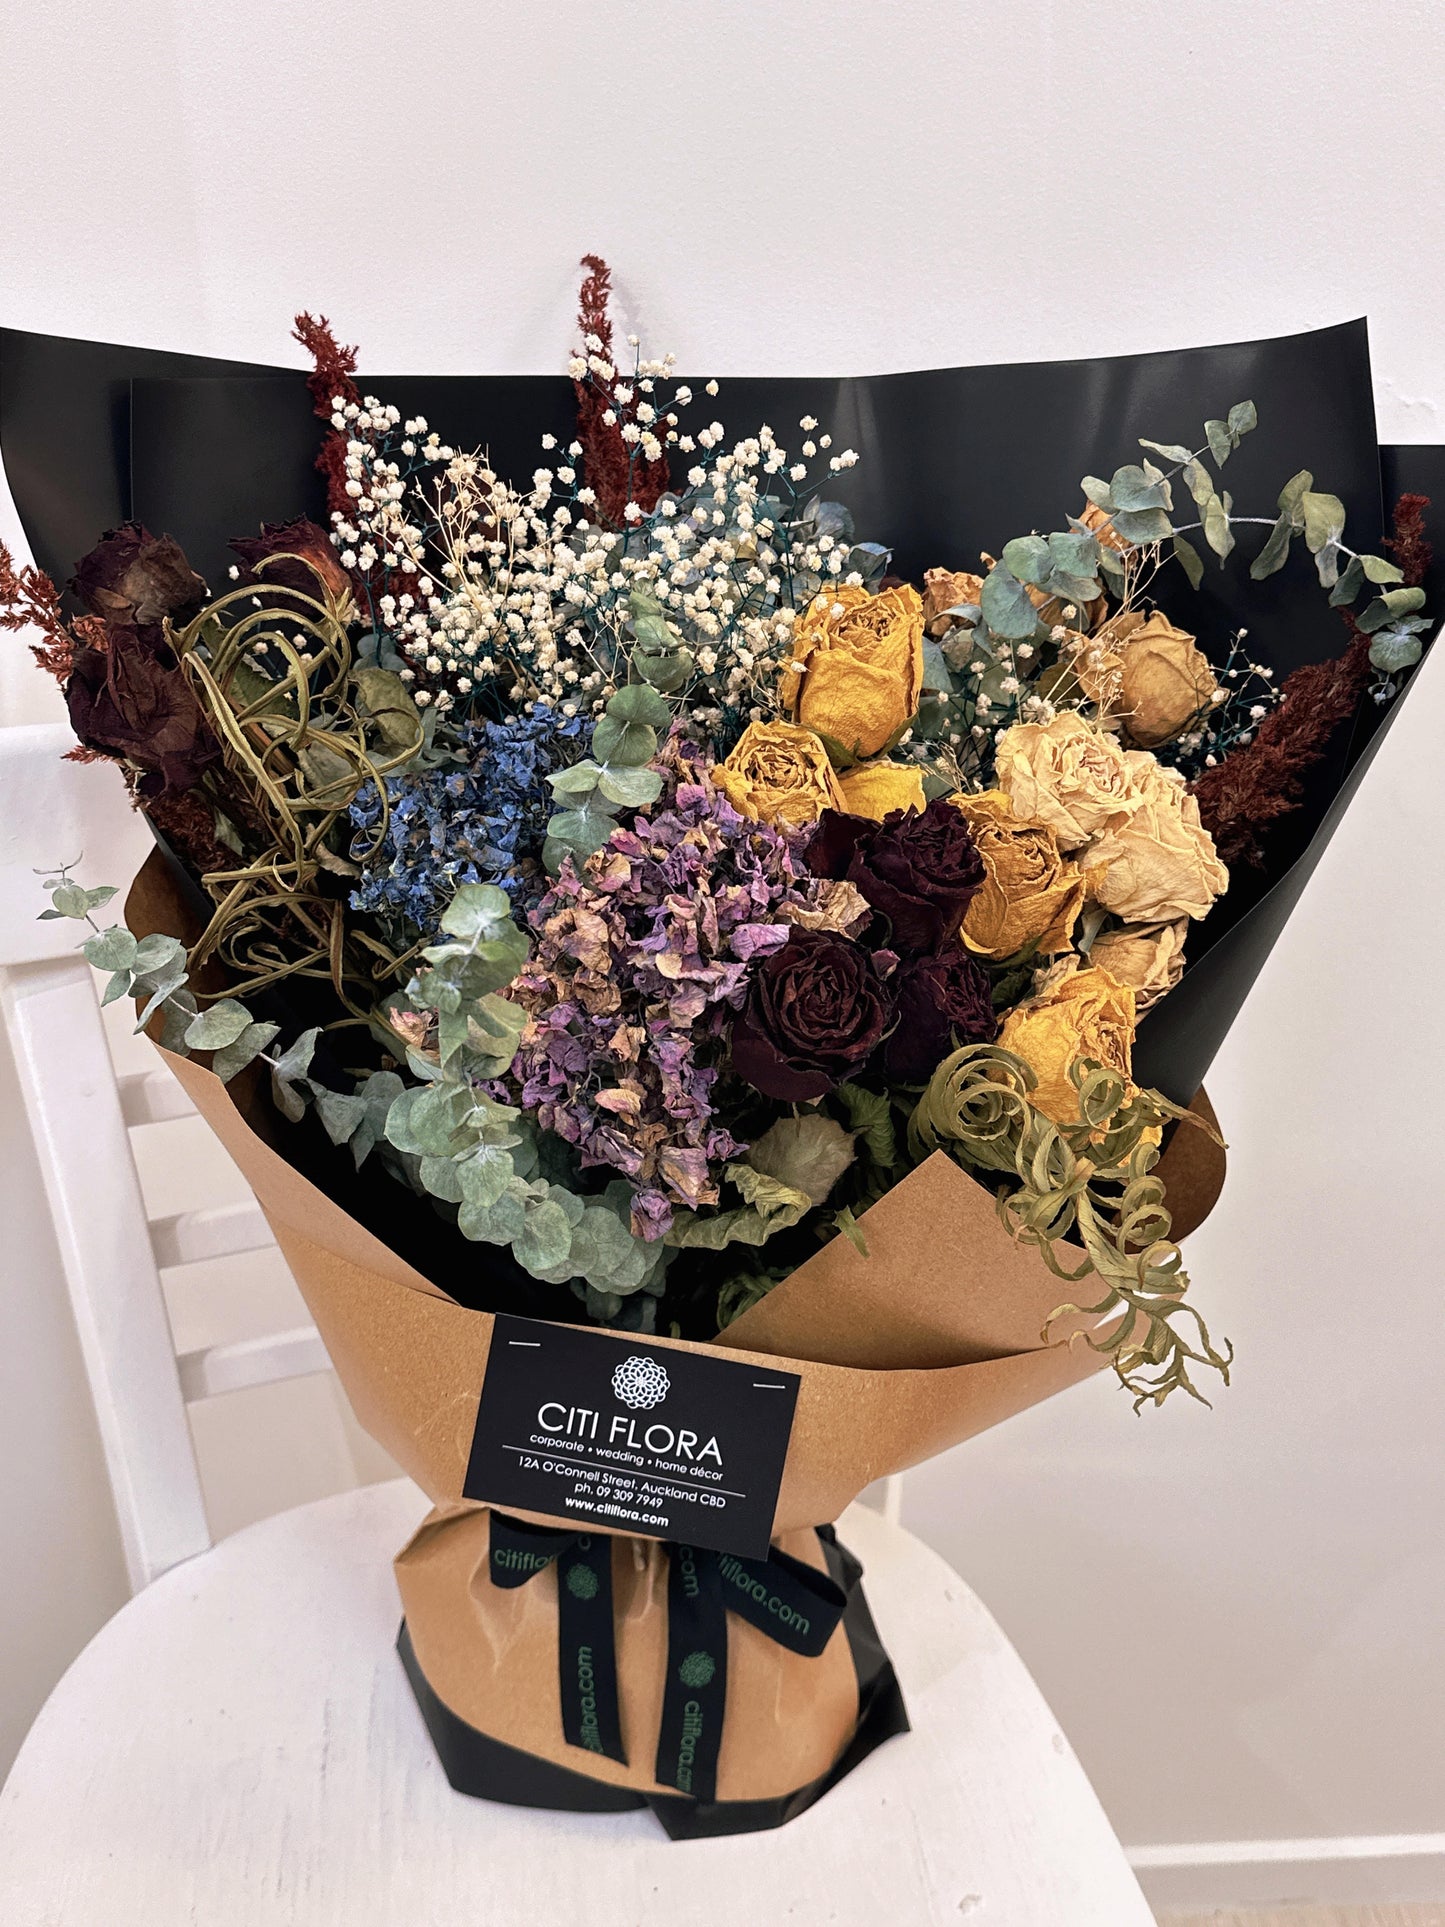 (JB0) Florist’s Choice Dried Flowers